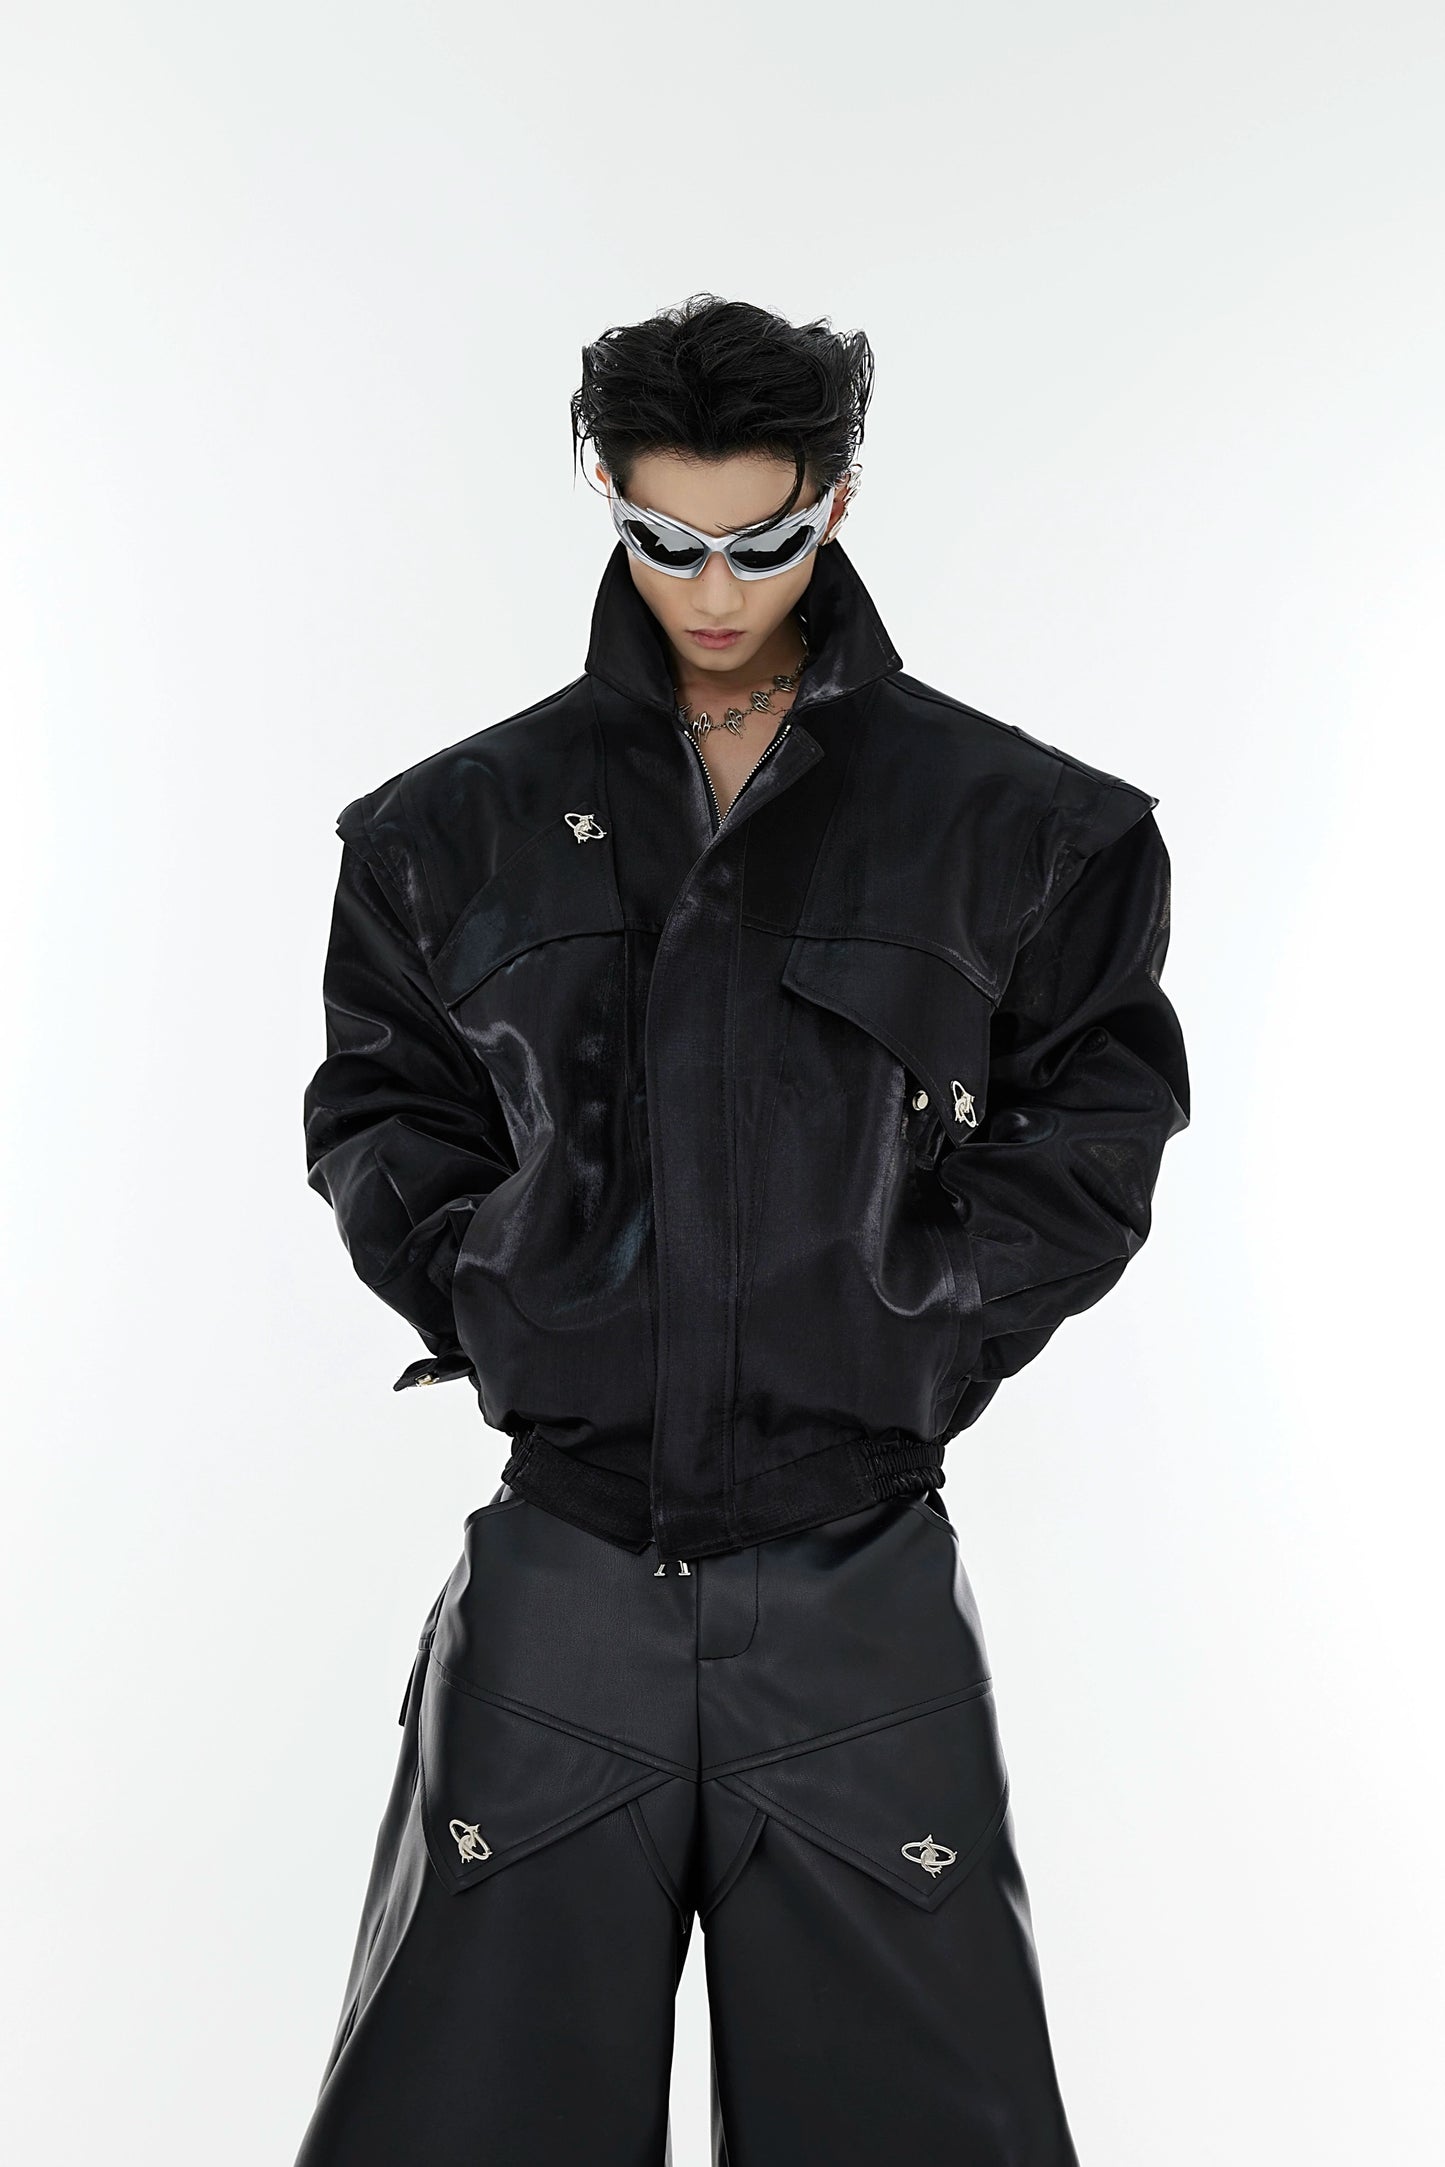 CulturE niche deconstructs streamer liquid padded shoulder cropped jacket, metal split design for men in leather